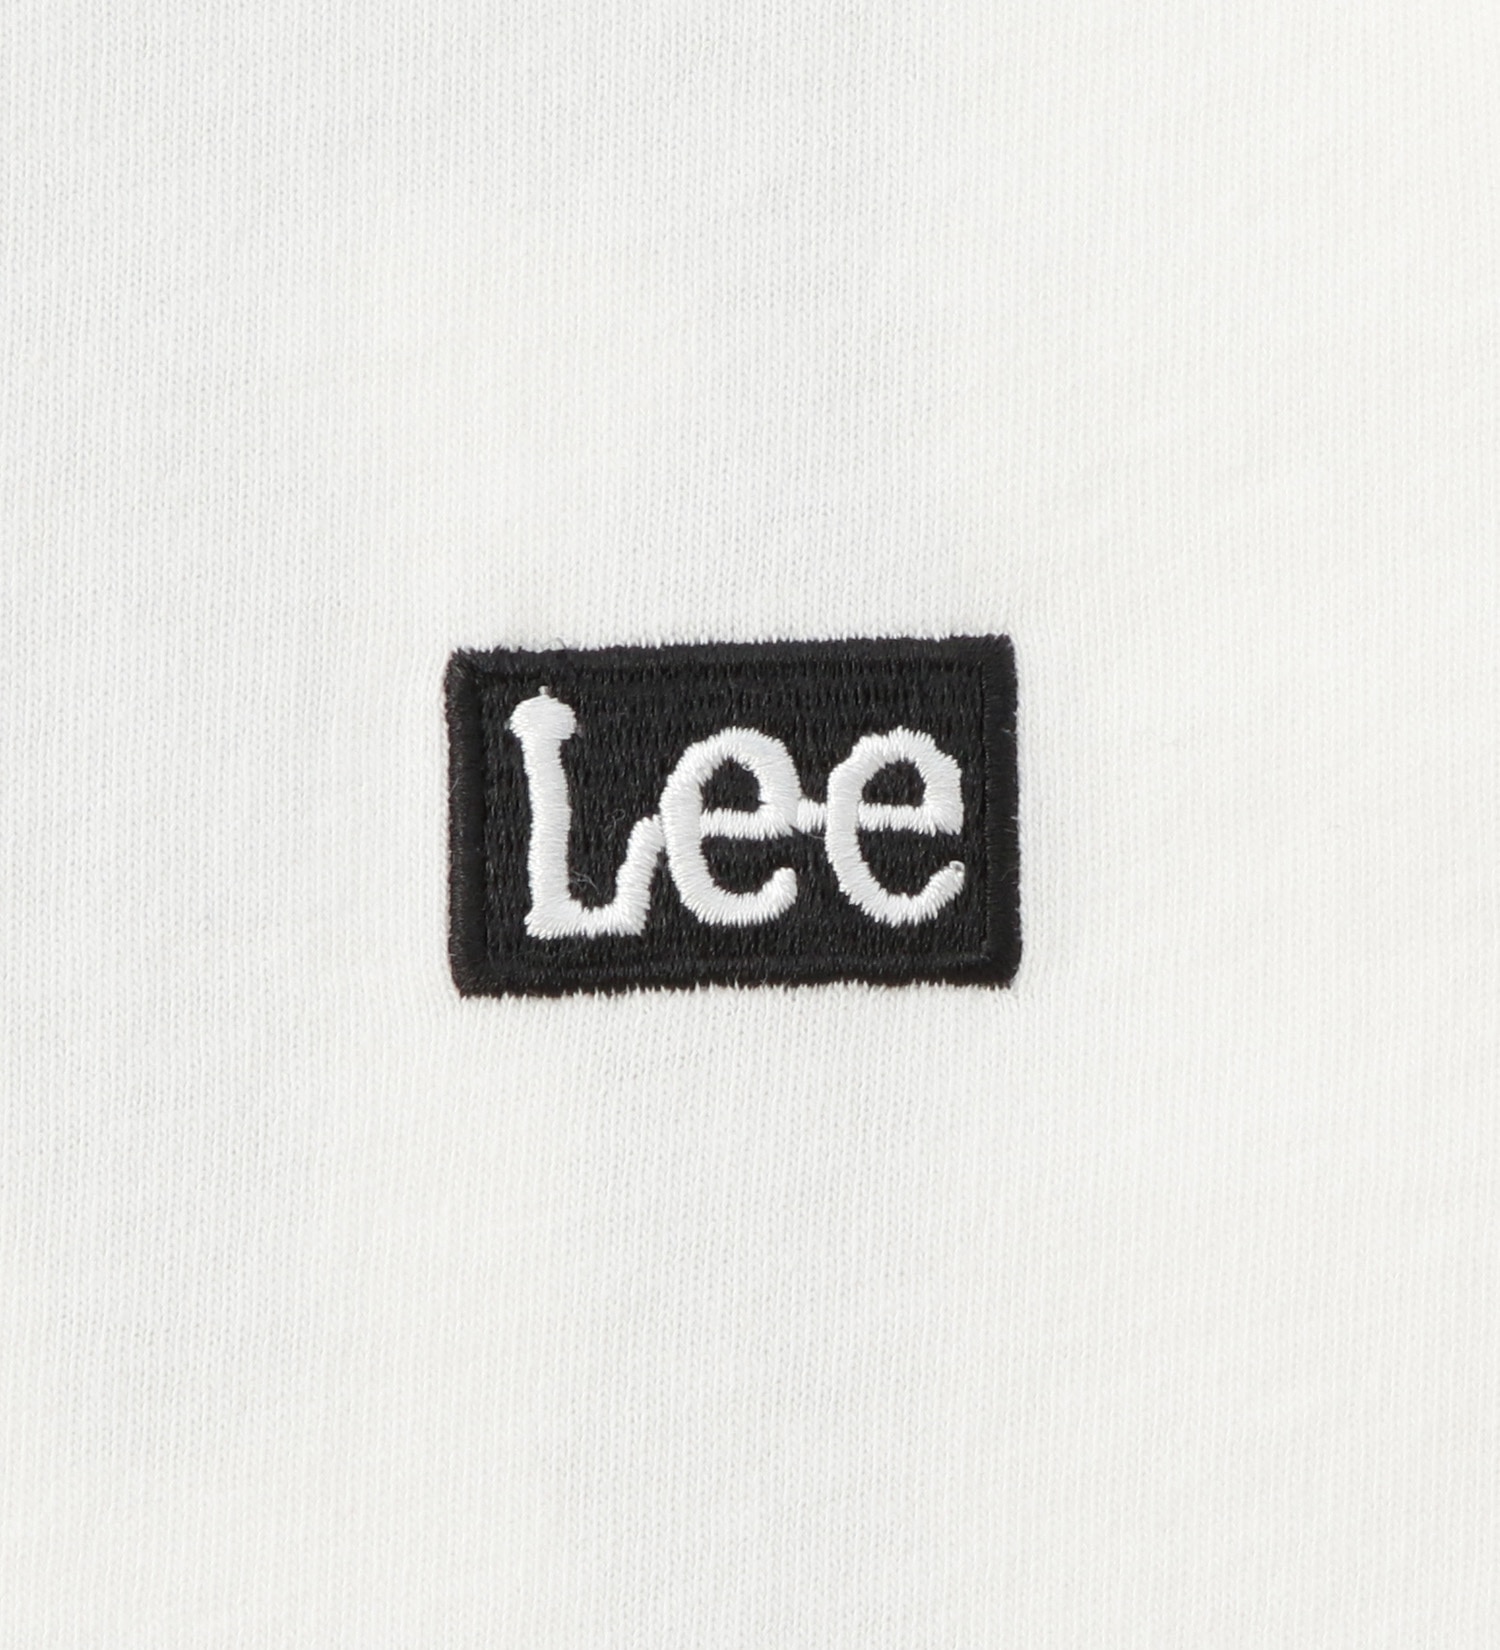 Lee(リー)の【BLACKFRIDAY】【110-150cm】キッズ Lee バックプリント長袖ラグランTシャツ|トップス/Tシャツ/カットソー/キッズ|ホワイト